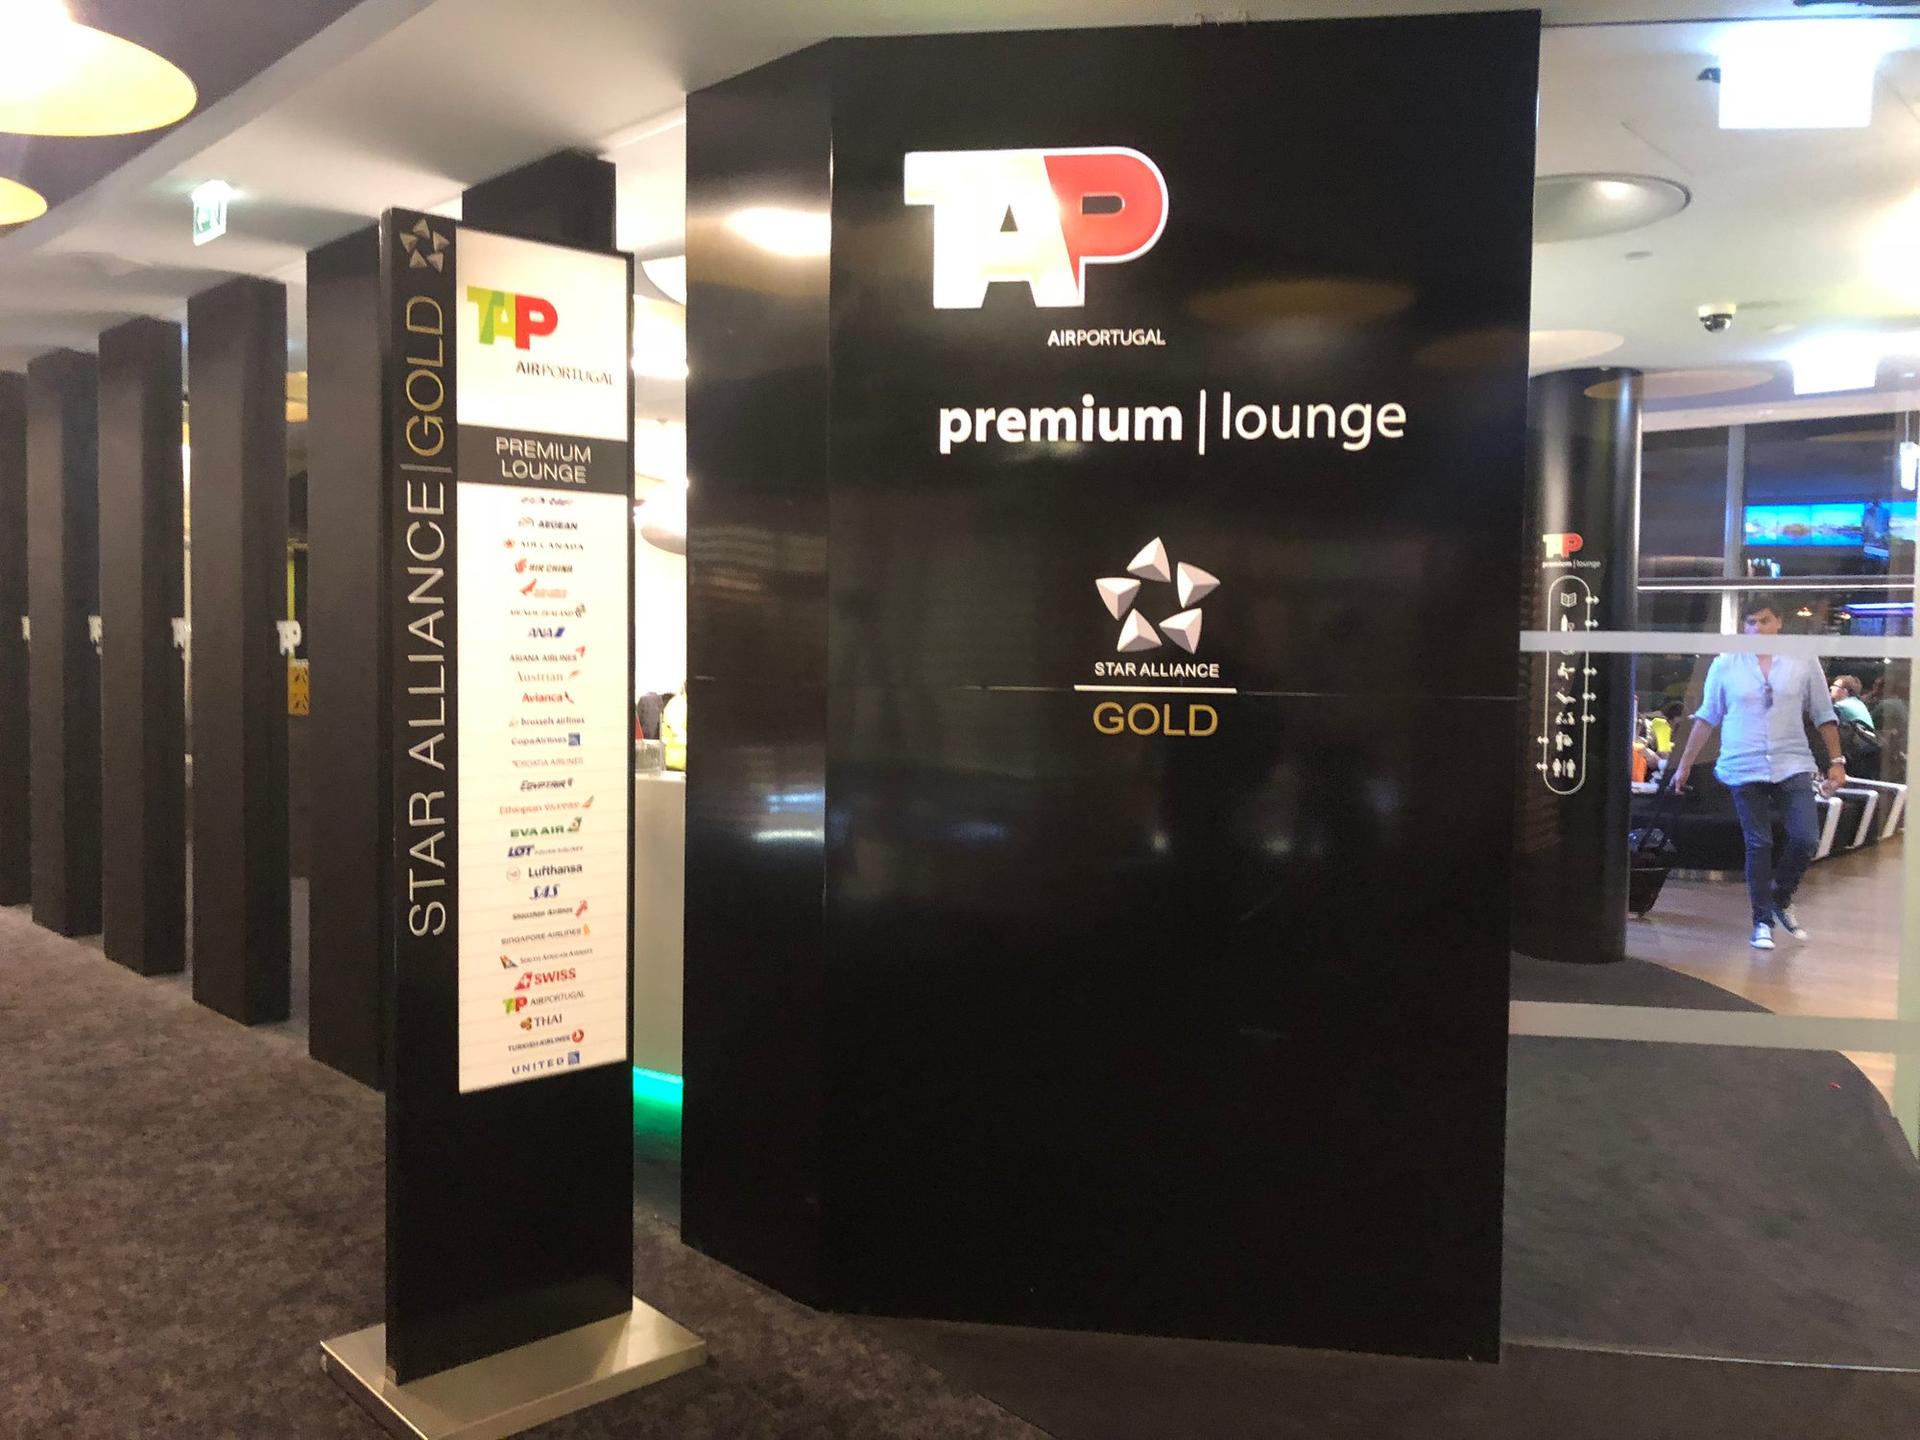 TAP Premium Lounge image 9 of 14